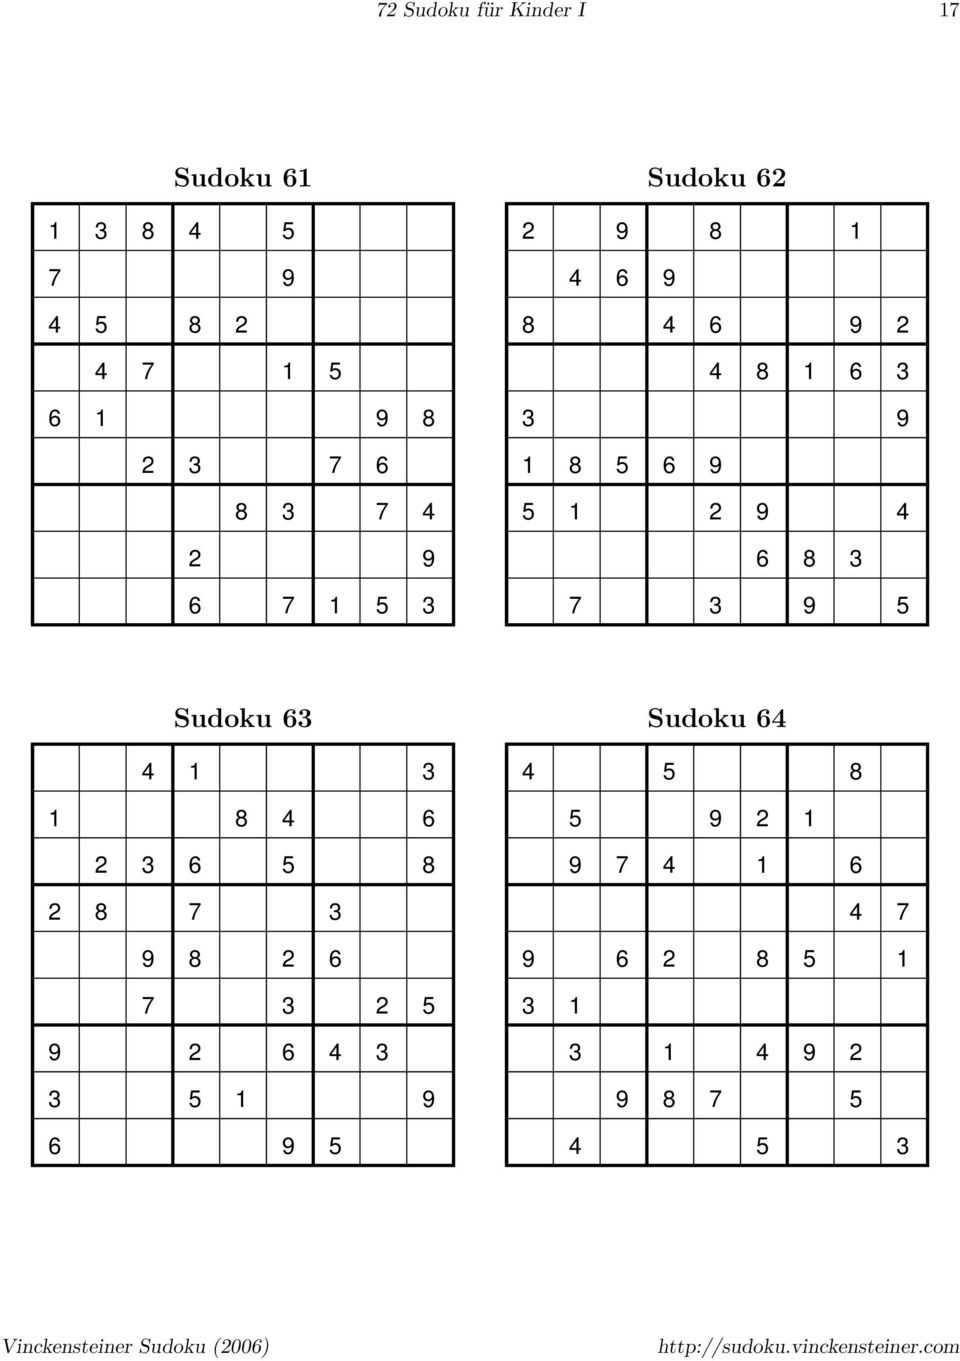 9 6 8 3 7 3 9 5 Sudoku 63 3 8 6 3 6 5 8 8 7 3 9 8 6 7 3 5 9 6